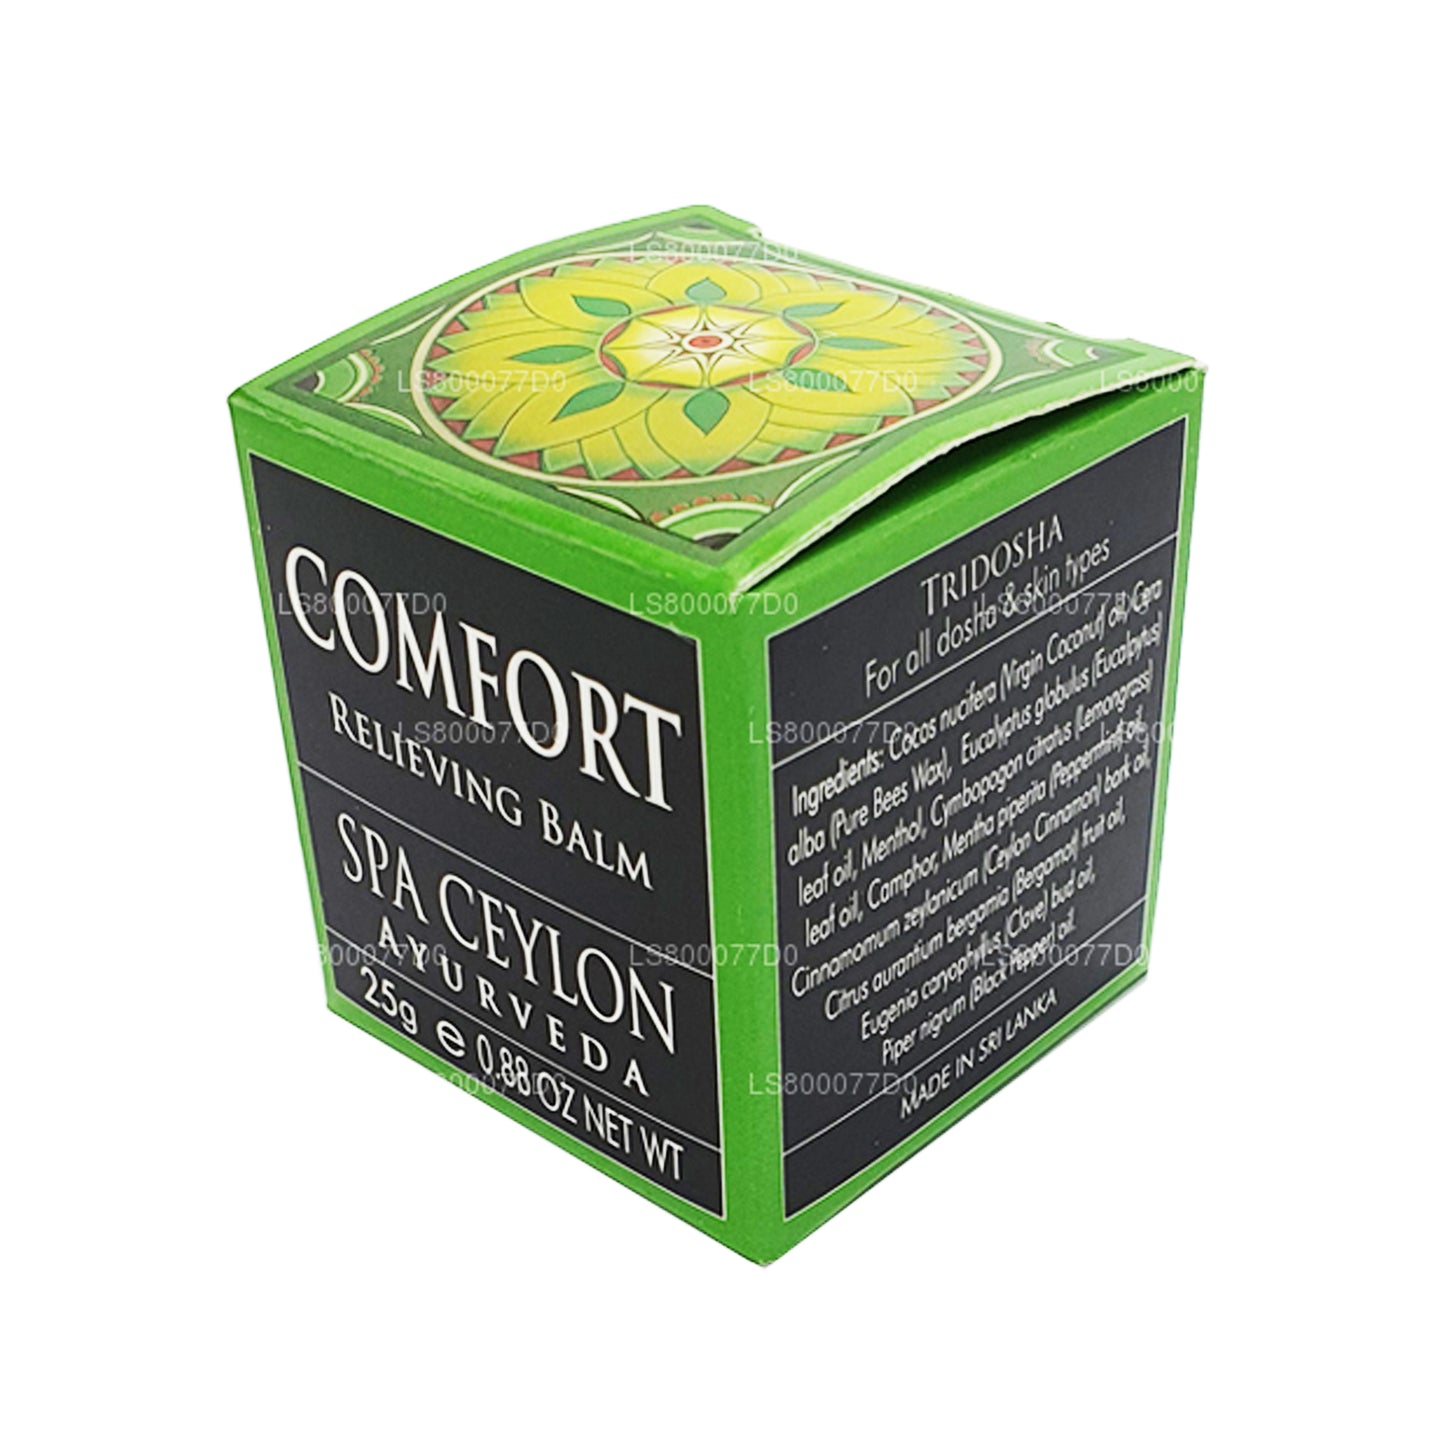 Spa Ceylon Comfort leevendav palsam (25g)